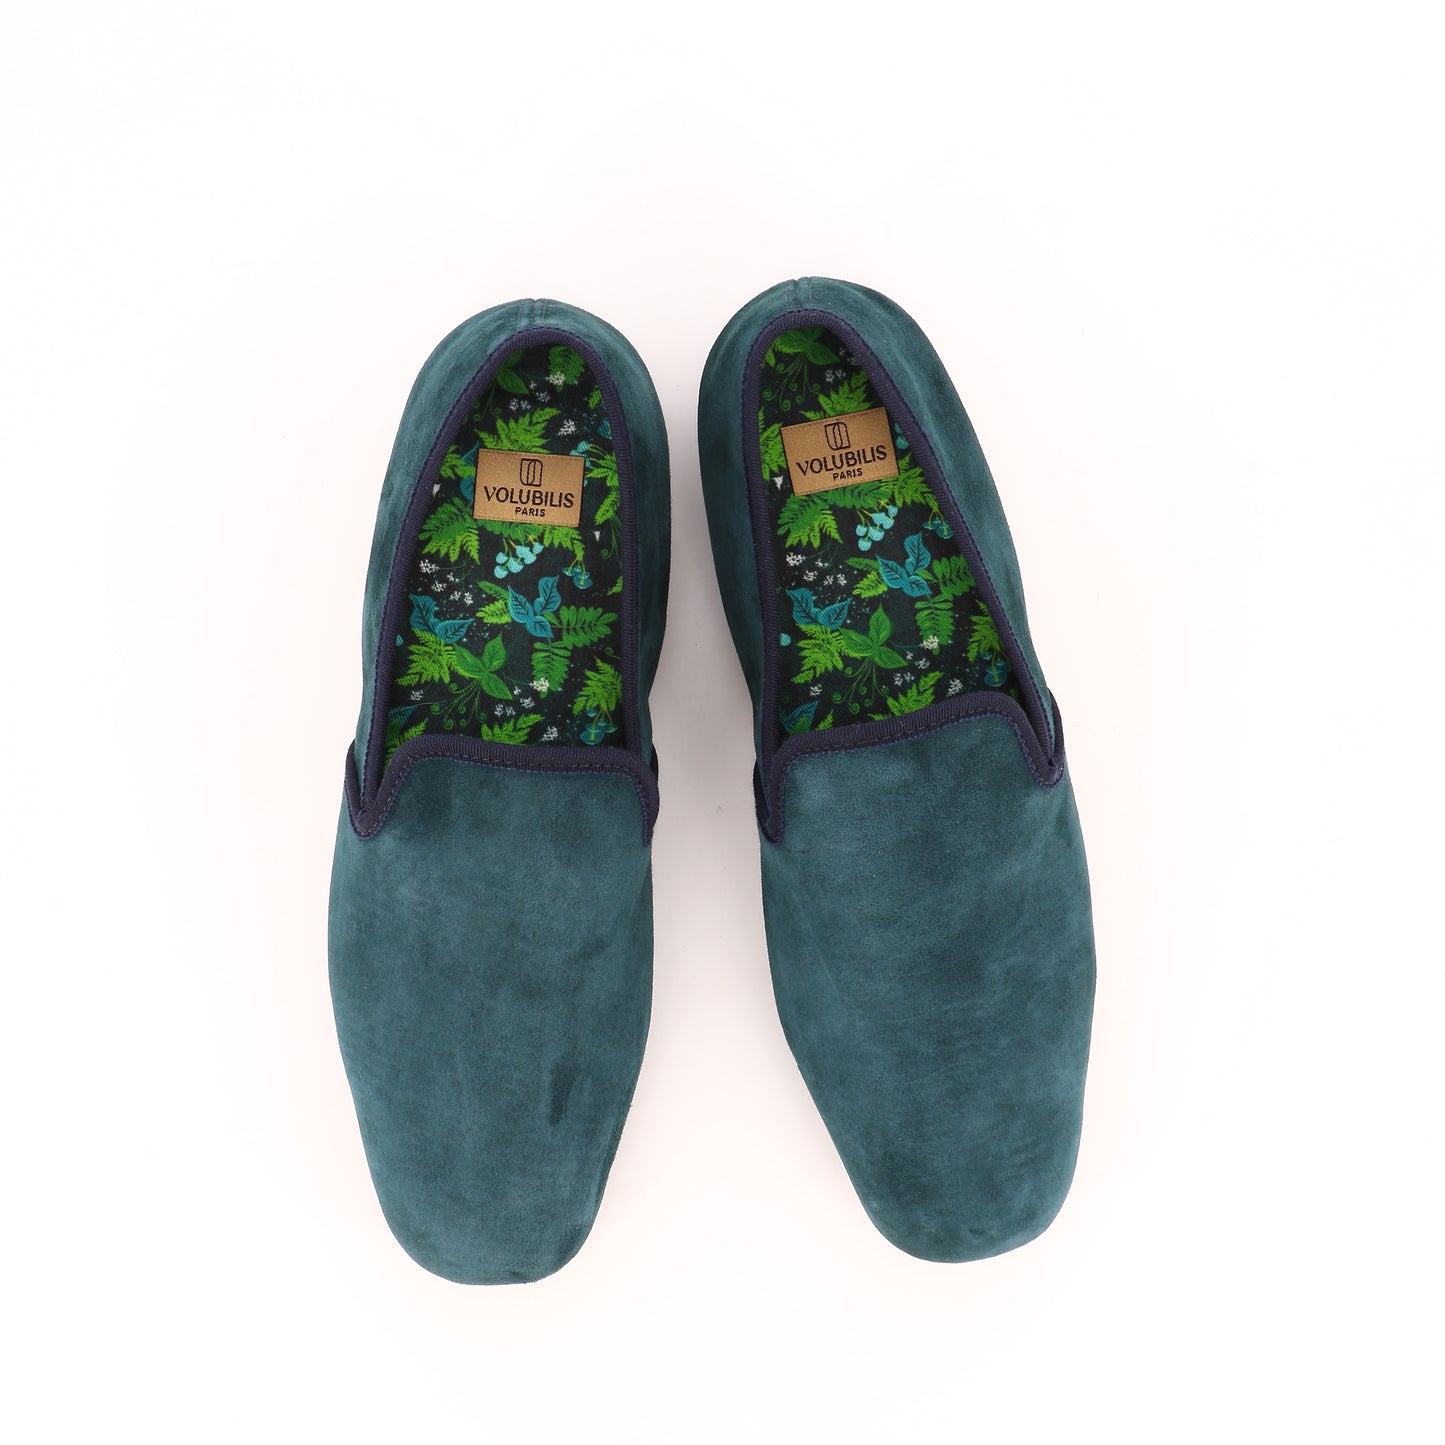 Emerald Forest NOA leather slipper 